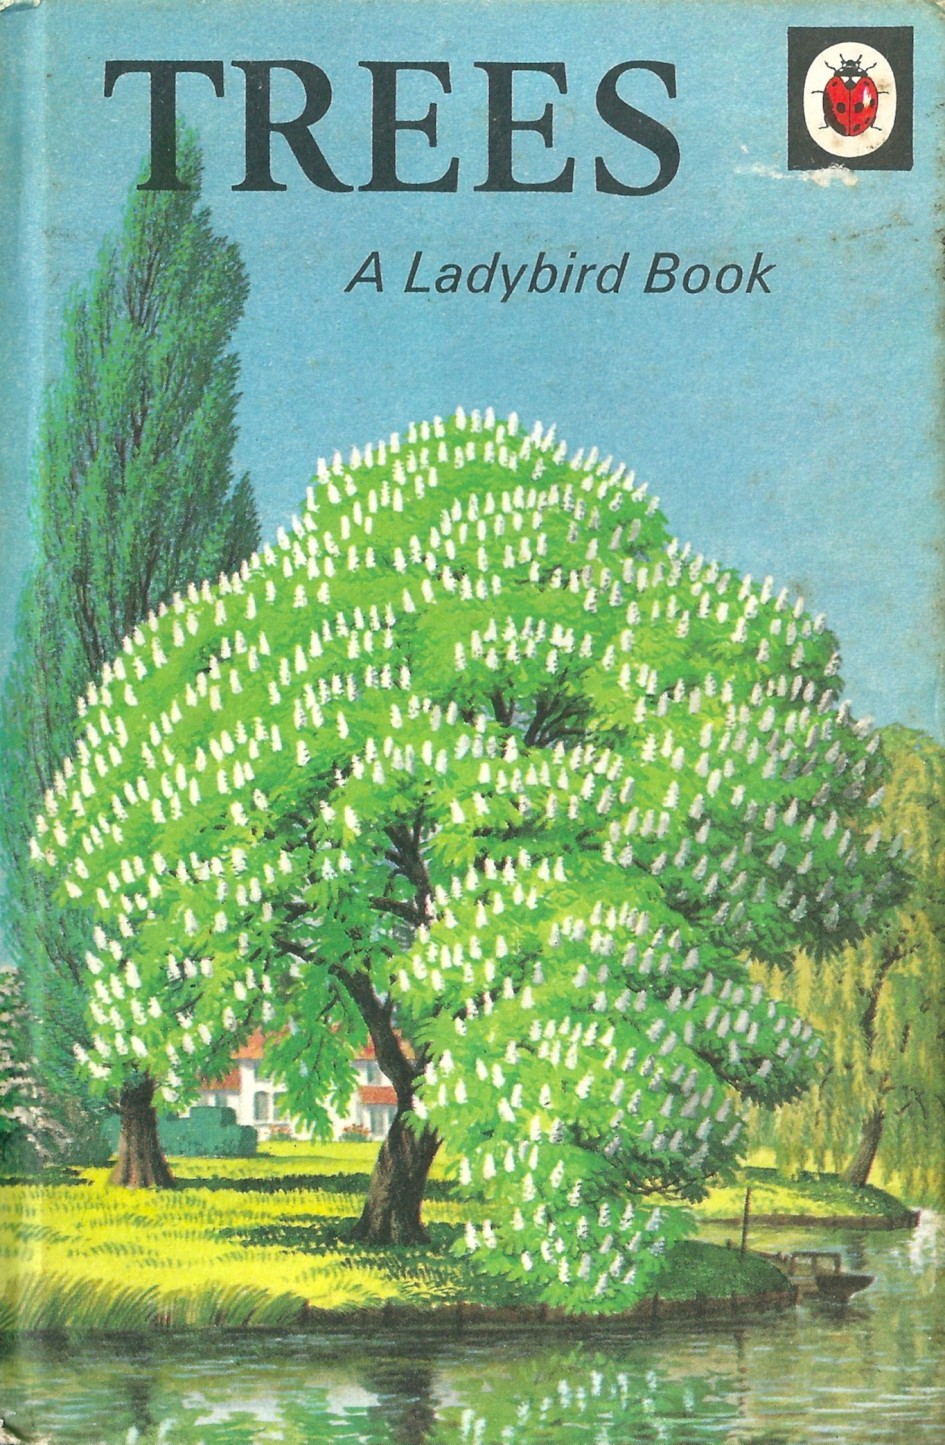 Ladybird book of Trees